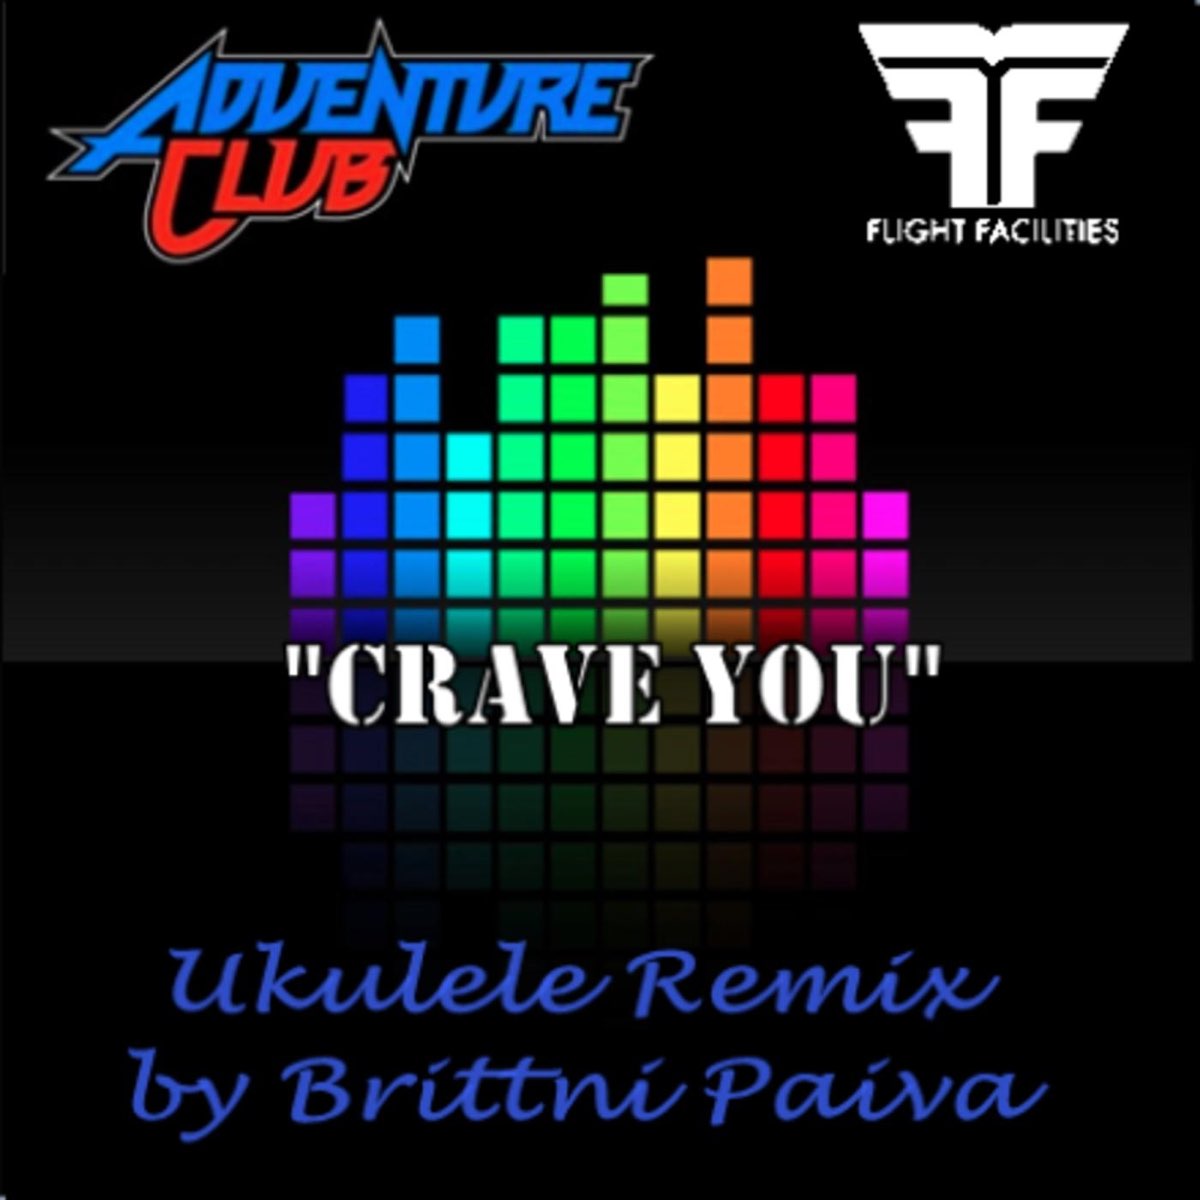 Crave You (Flight Facilities Adventure Club Ukulele Remix) - Single by  Brittni Paiva on Apple Music